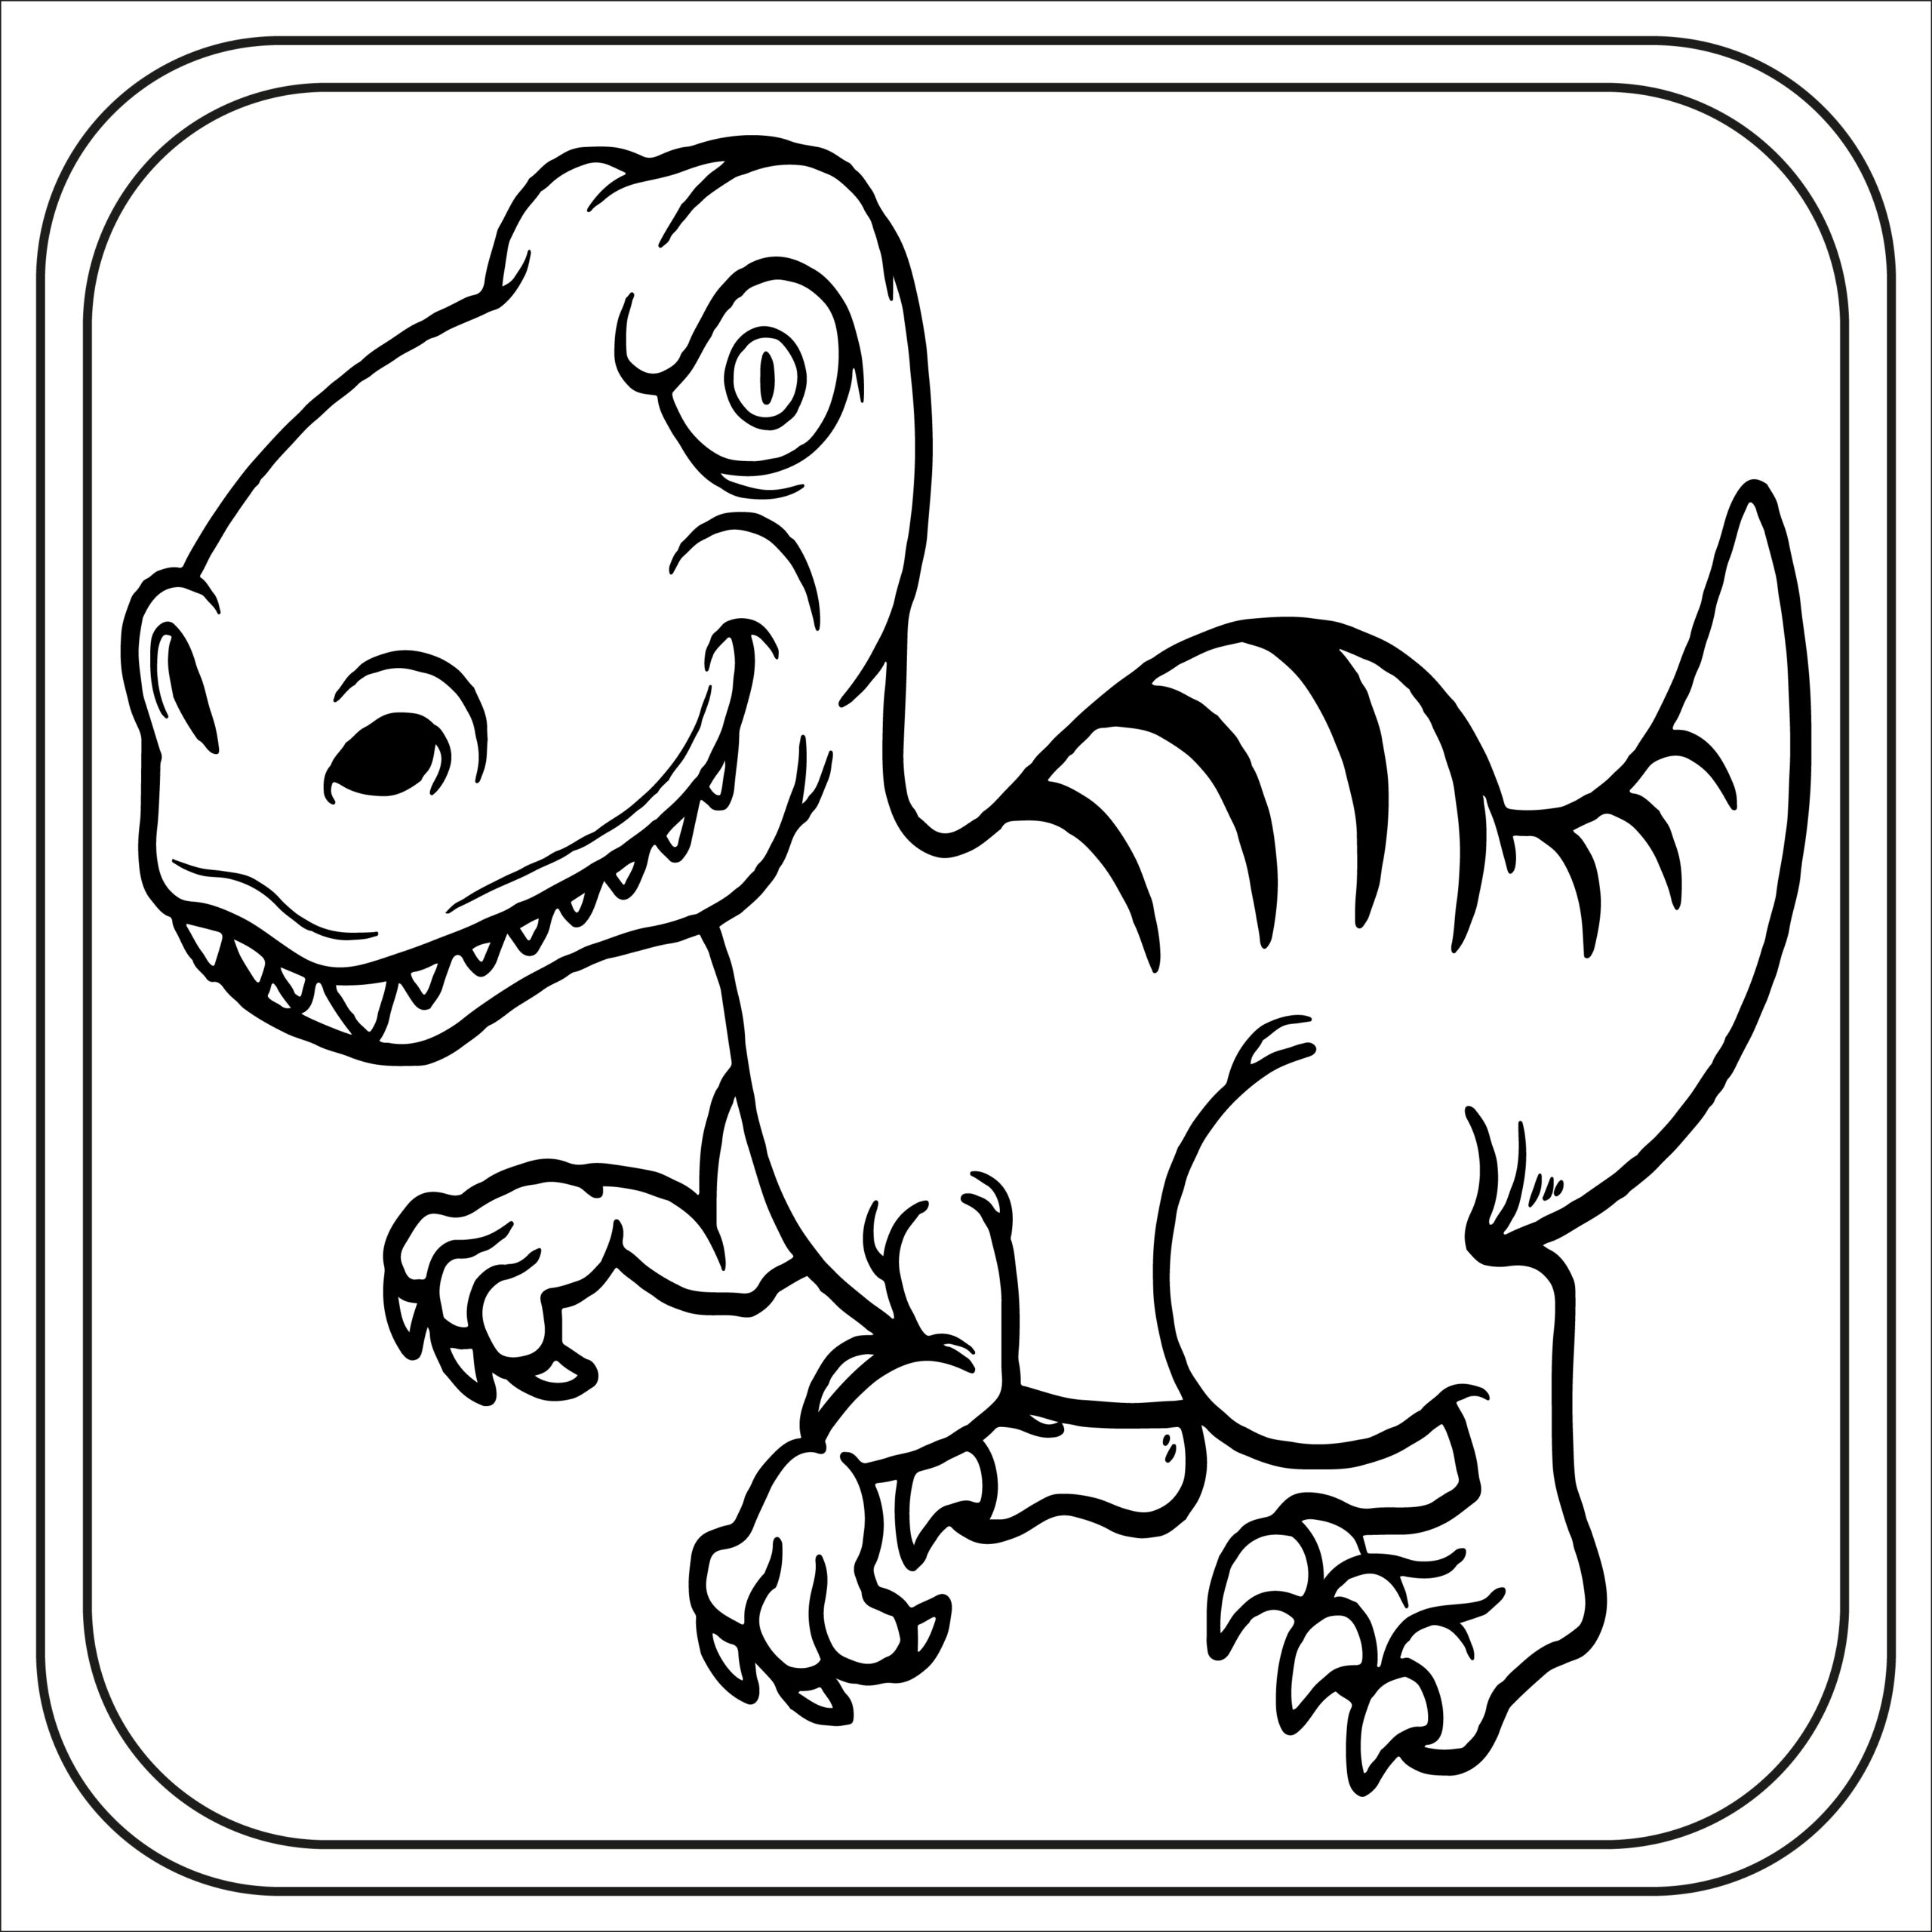 Dinosaur coloring pages preschool kindergarten first grade made by teachers